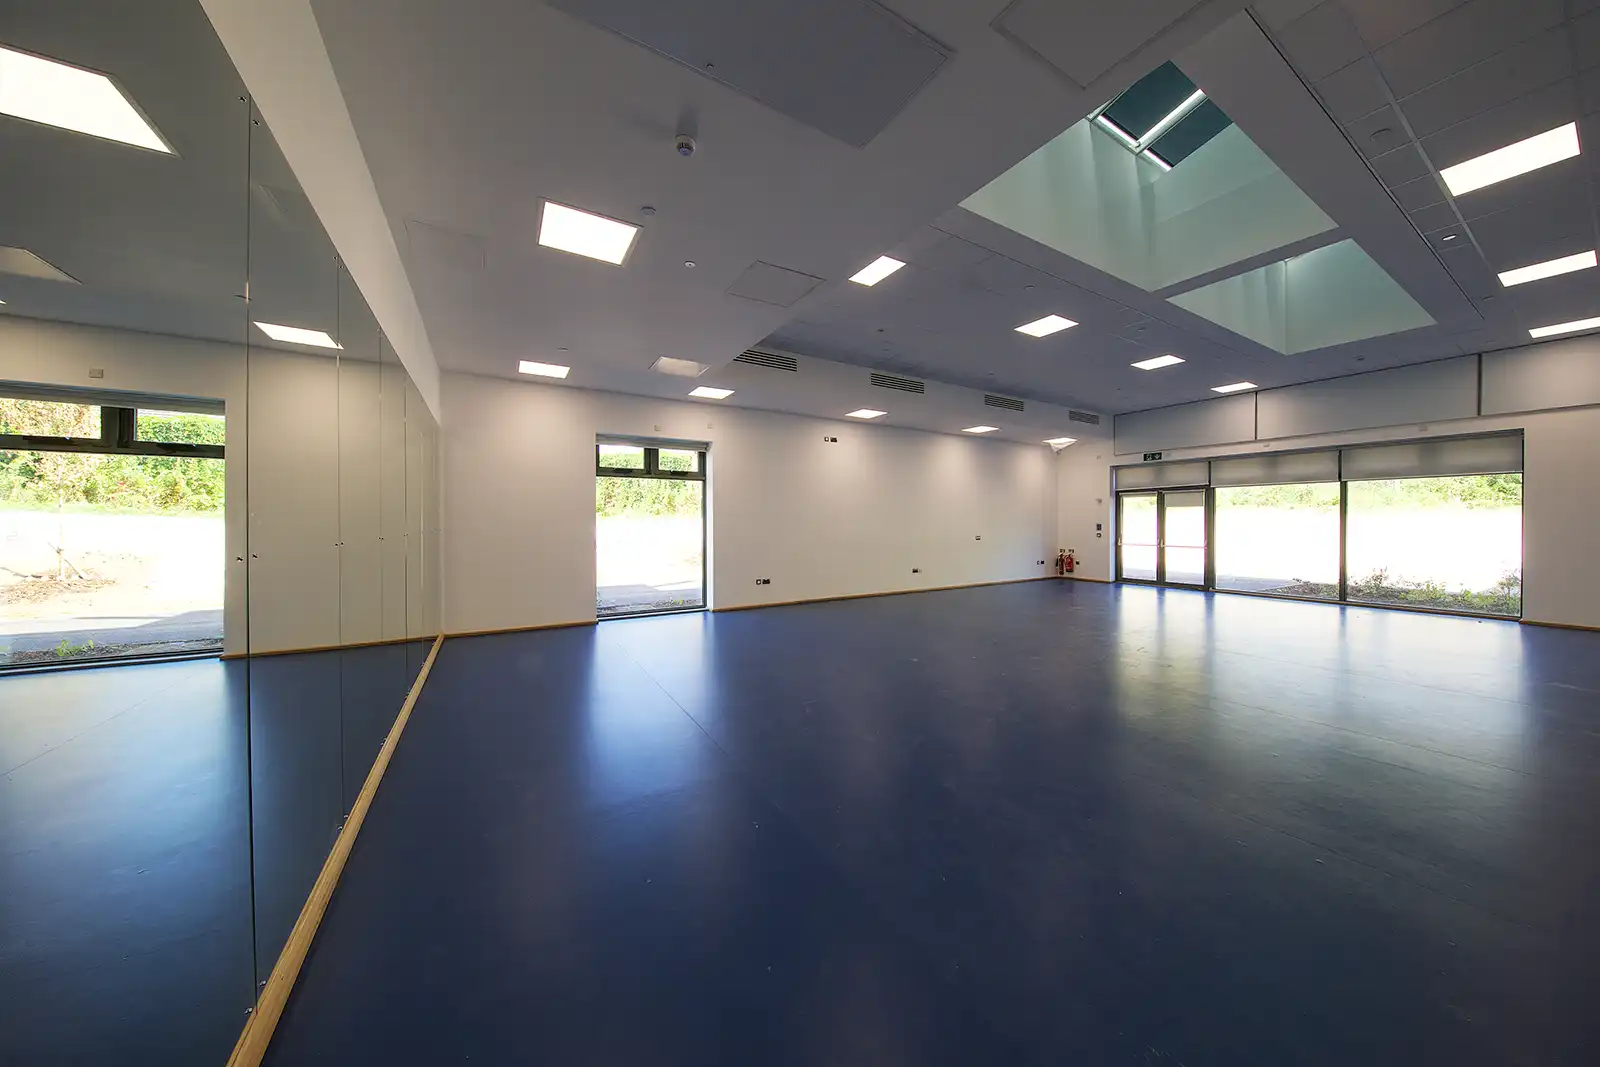 The new dance studio at Stonehenge School, Amesbury